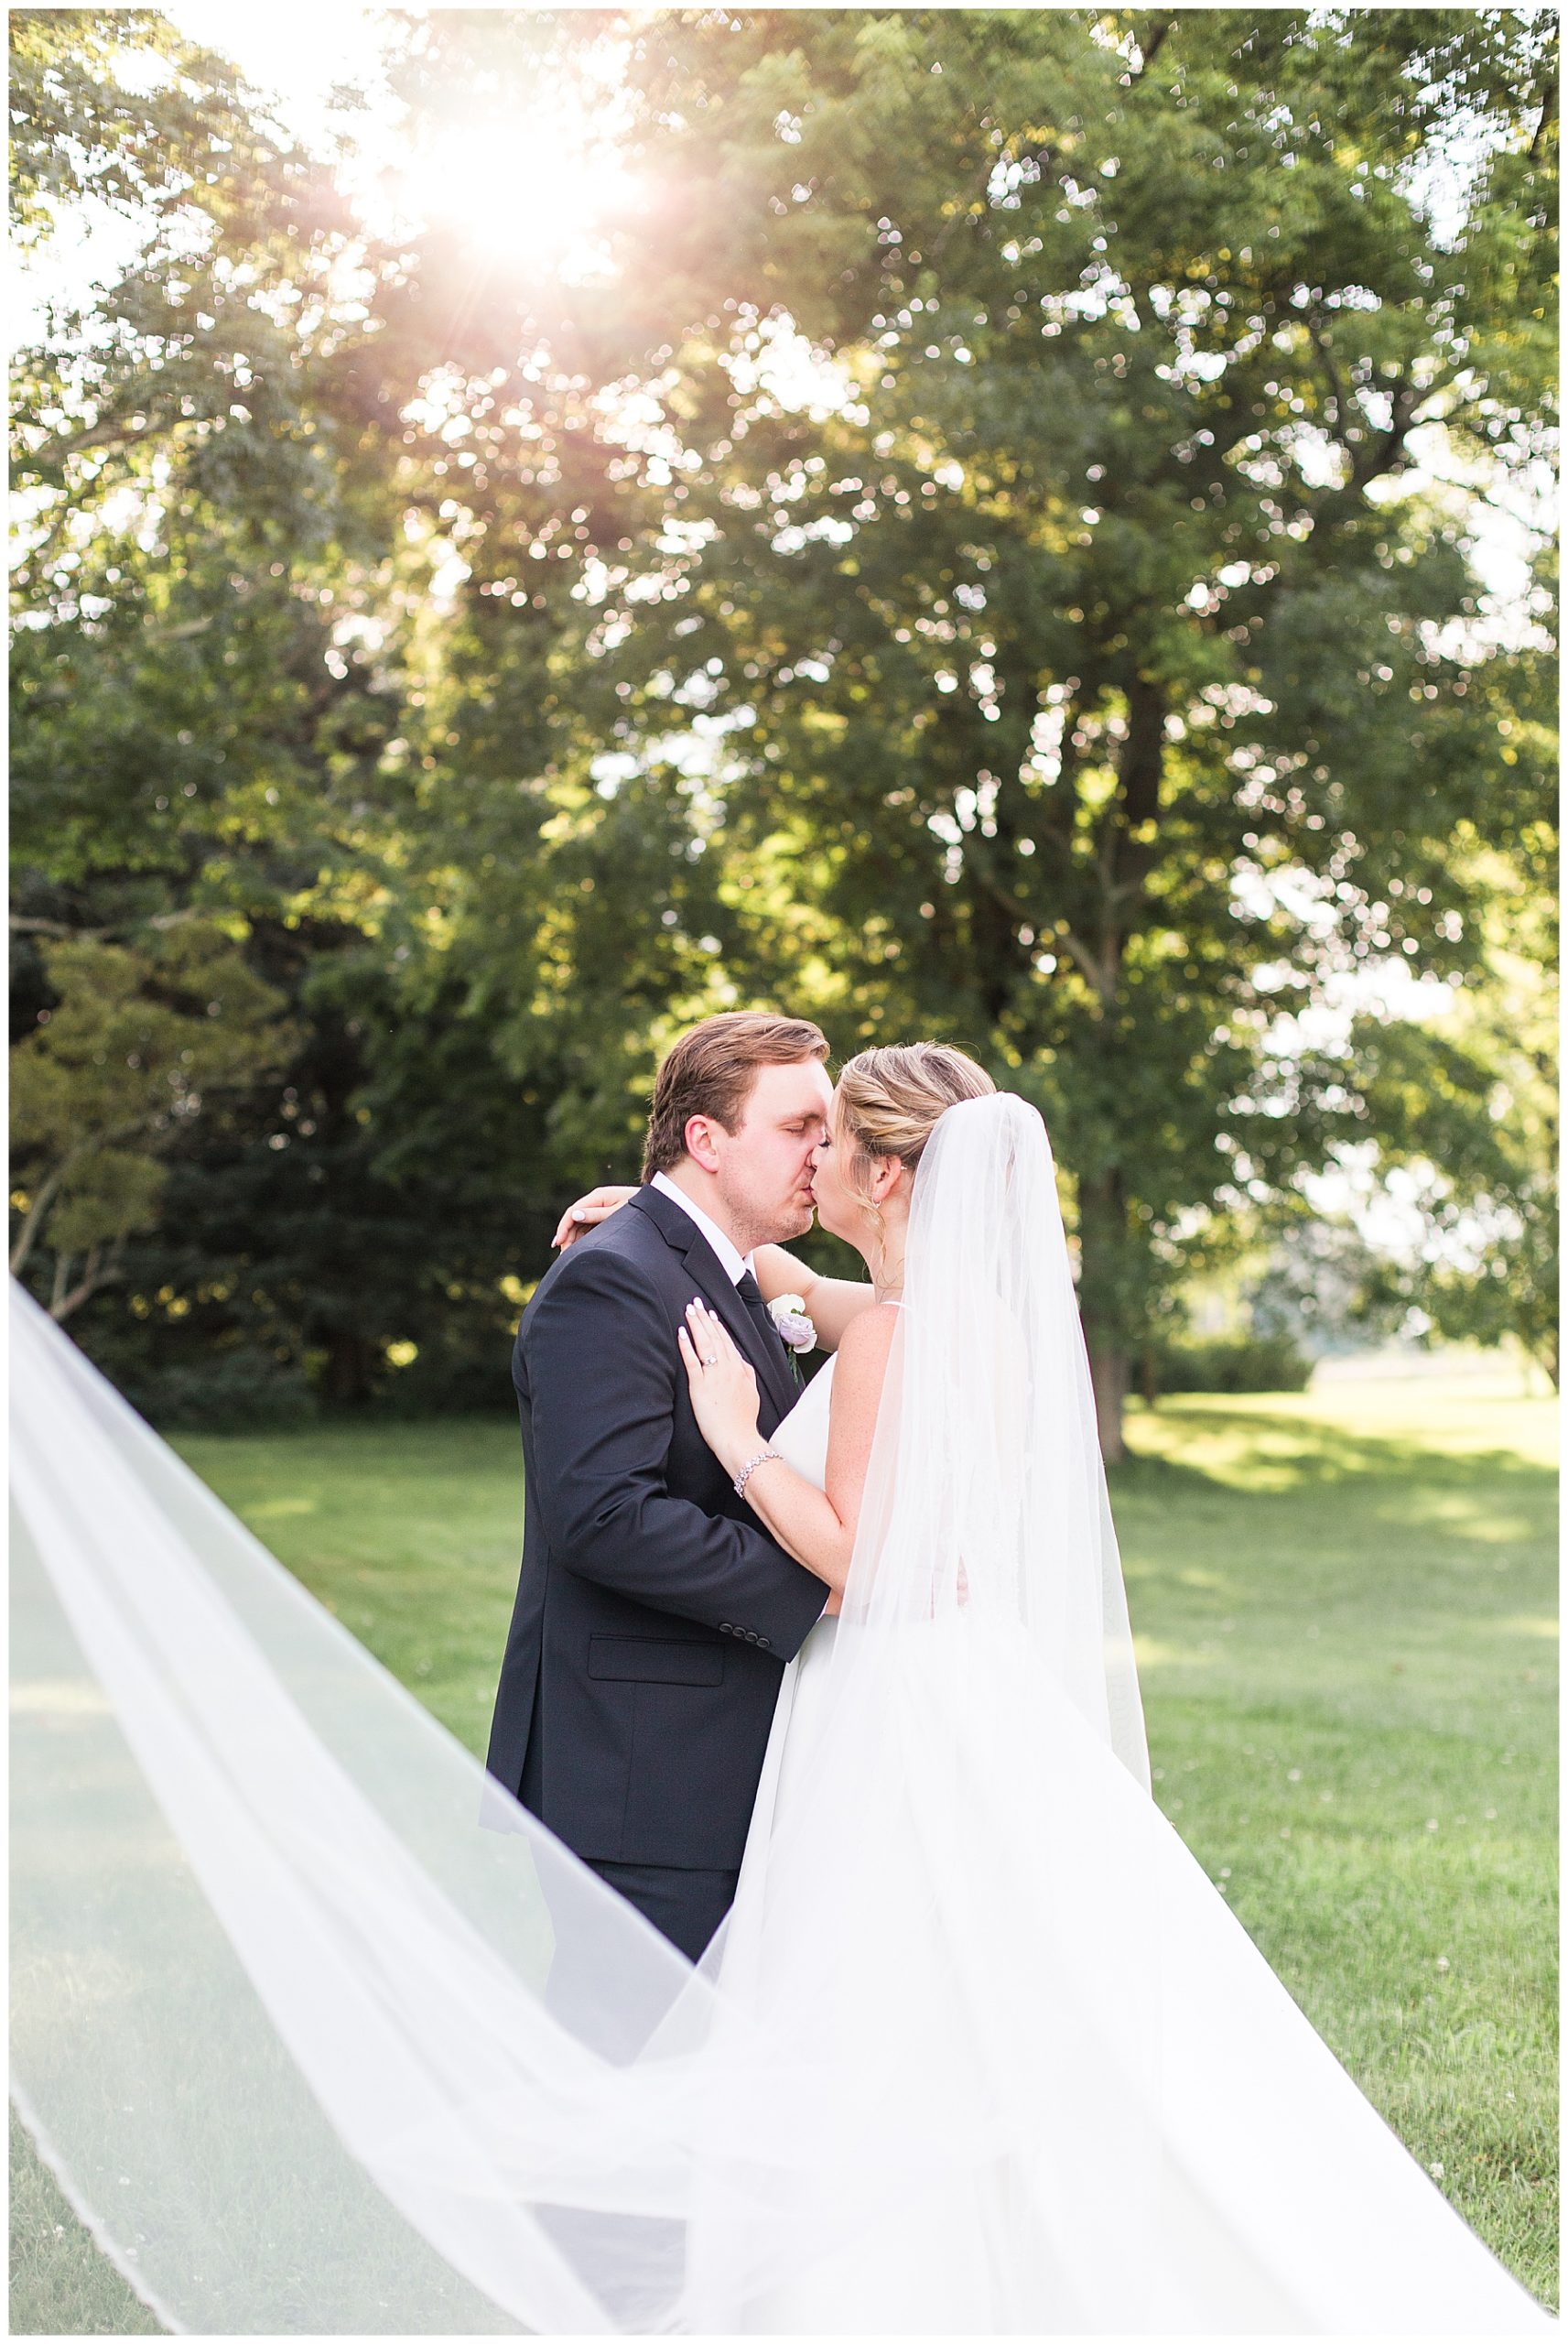 Kellan + Nick | Rockwood Manor, Virginia Wedding ...